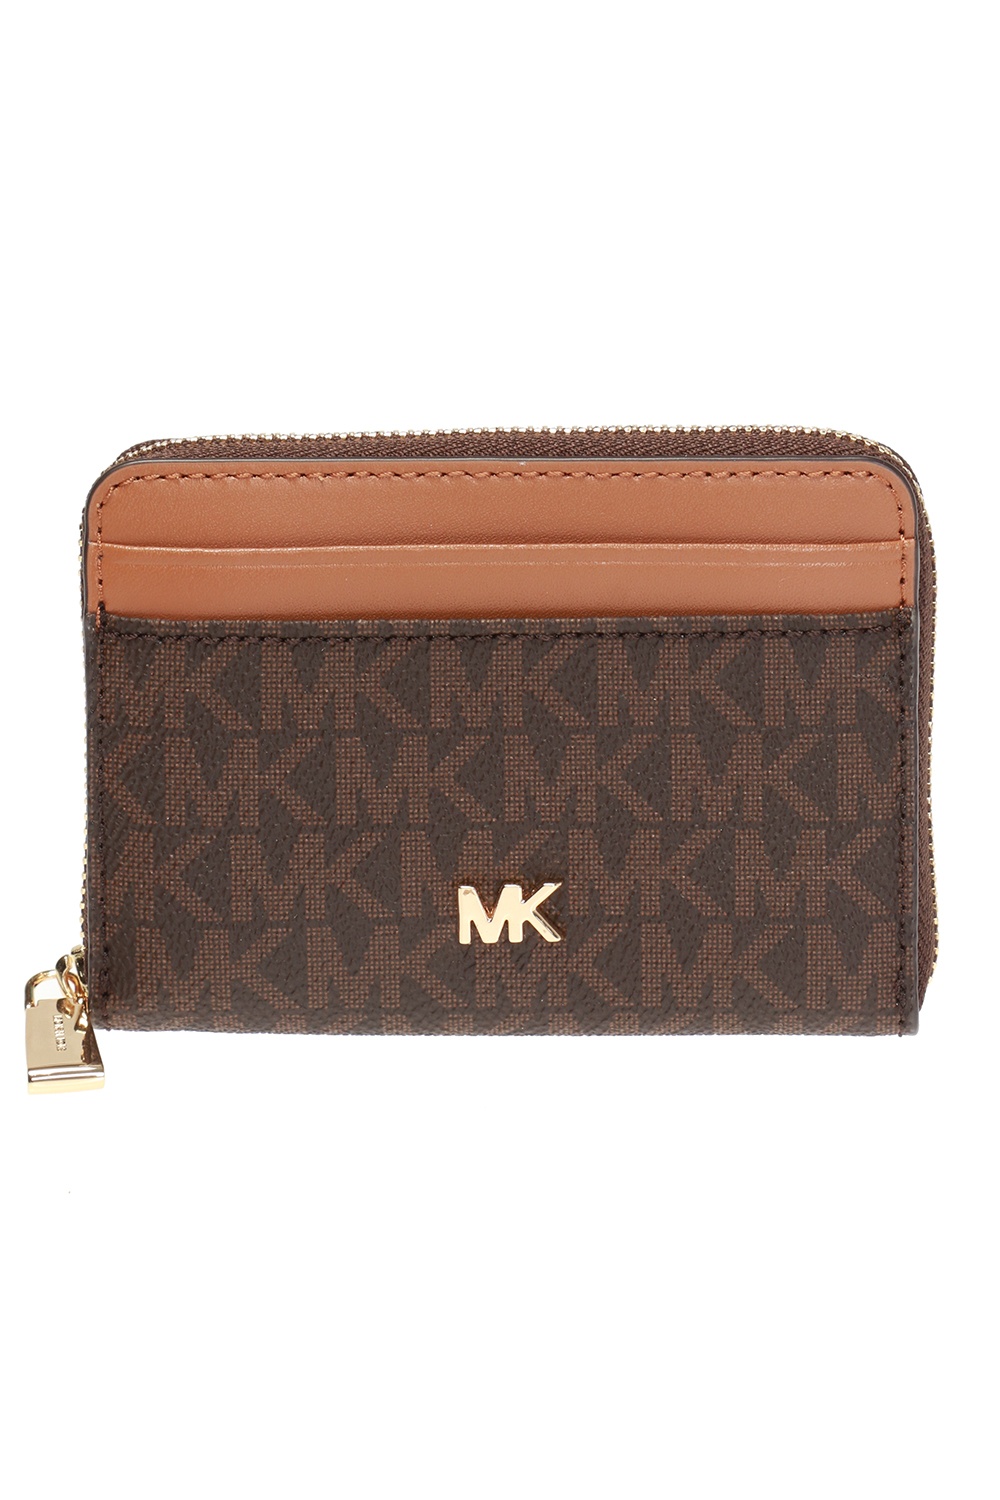 mk wallet australia